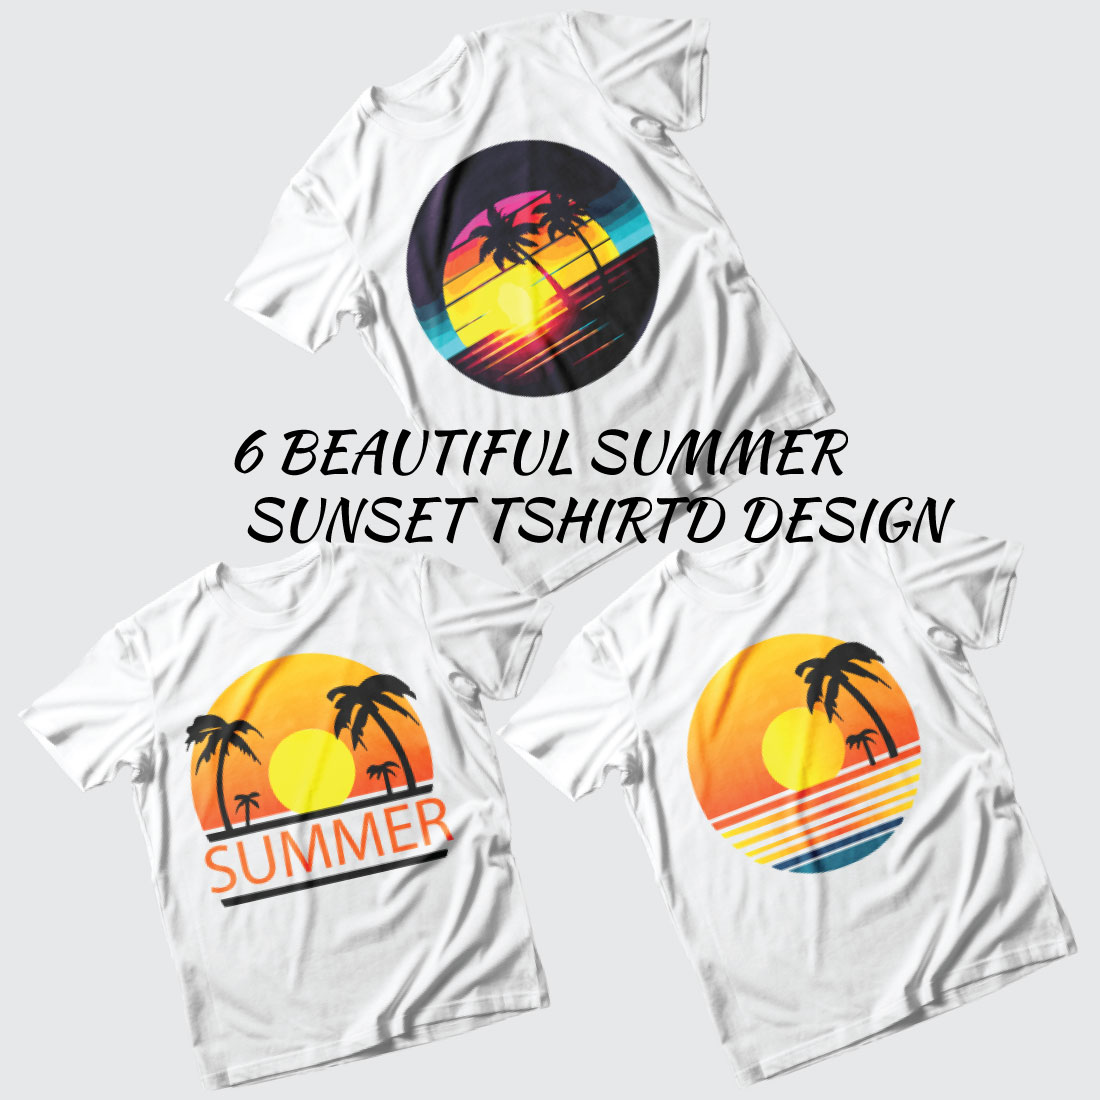 6 Beautiful summer sunset t-shirts design cover image.